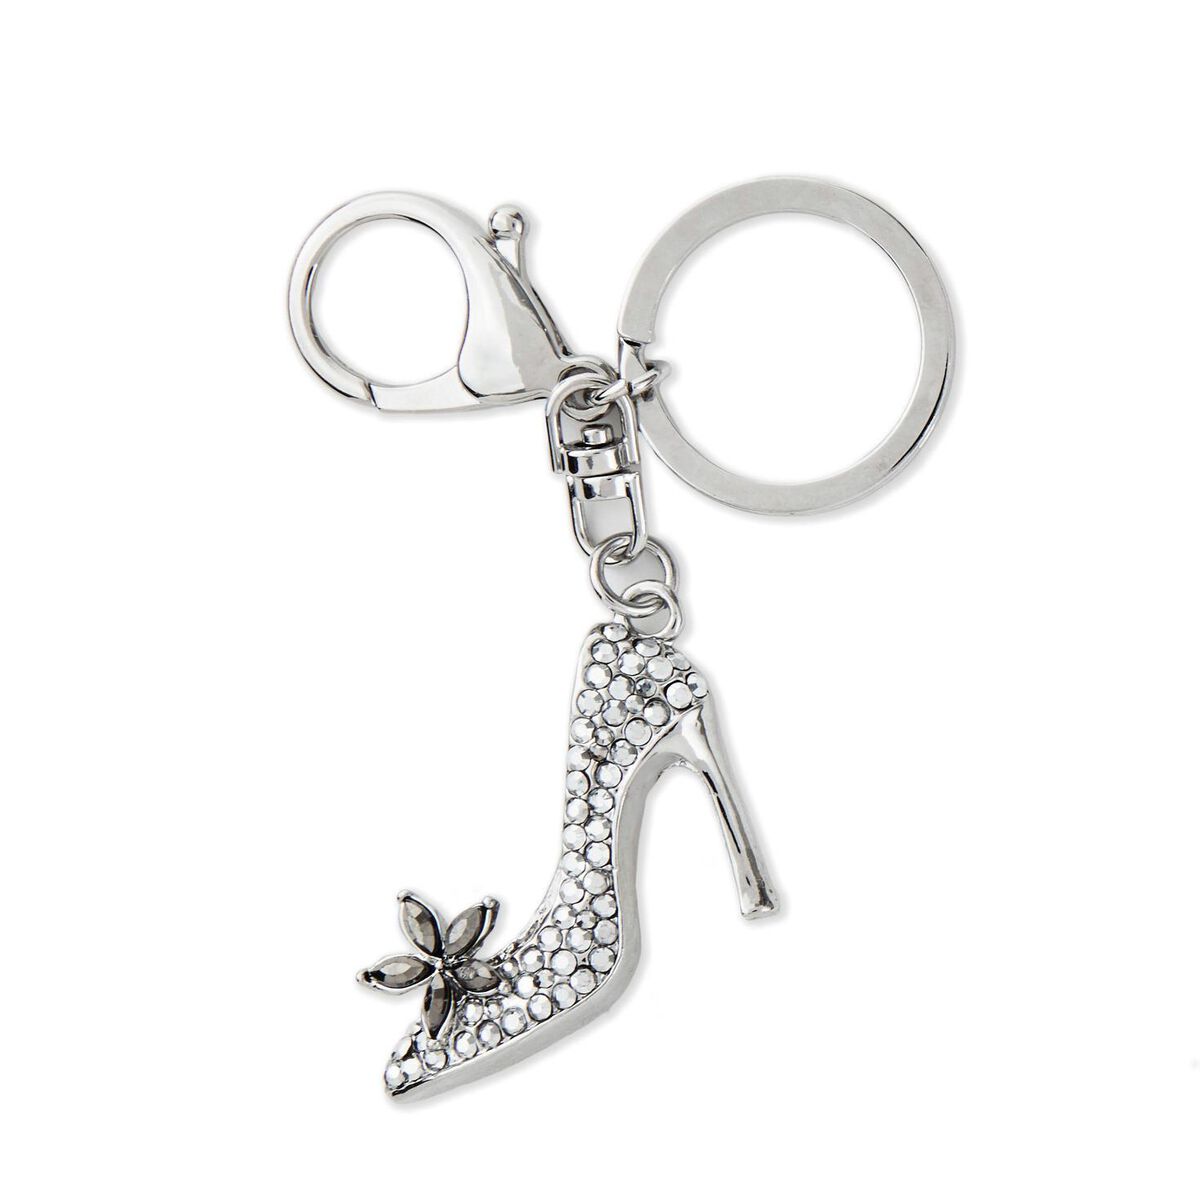 Bejeweled Silver High-Heel Shoe Keychain - Car Accessories - Hallmark